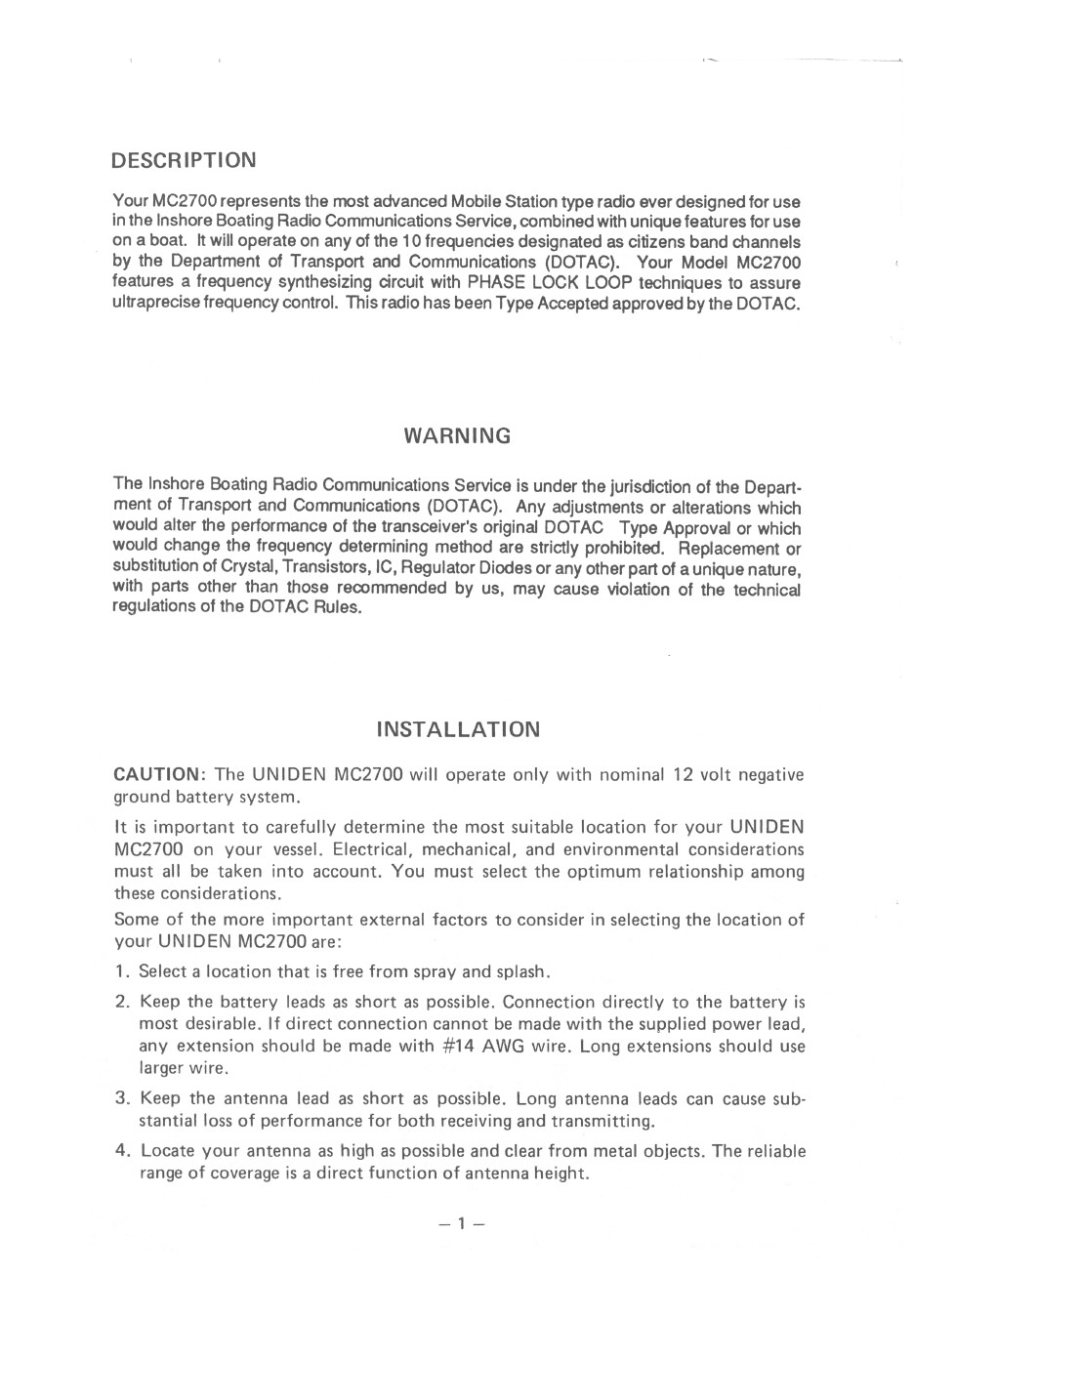 Uniden MC2700 manual INSTAllATION, Description 